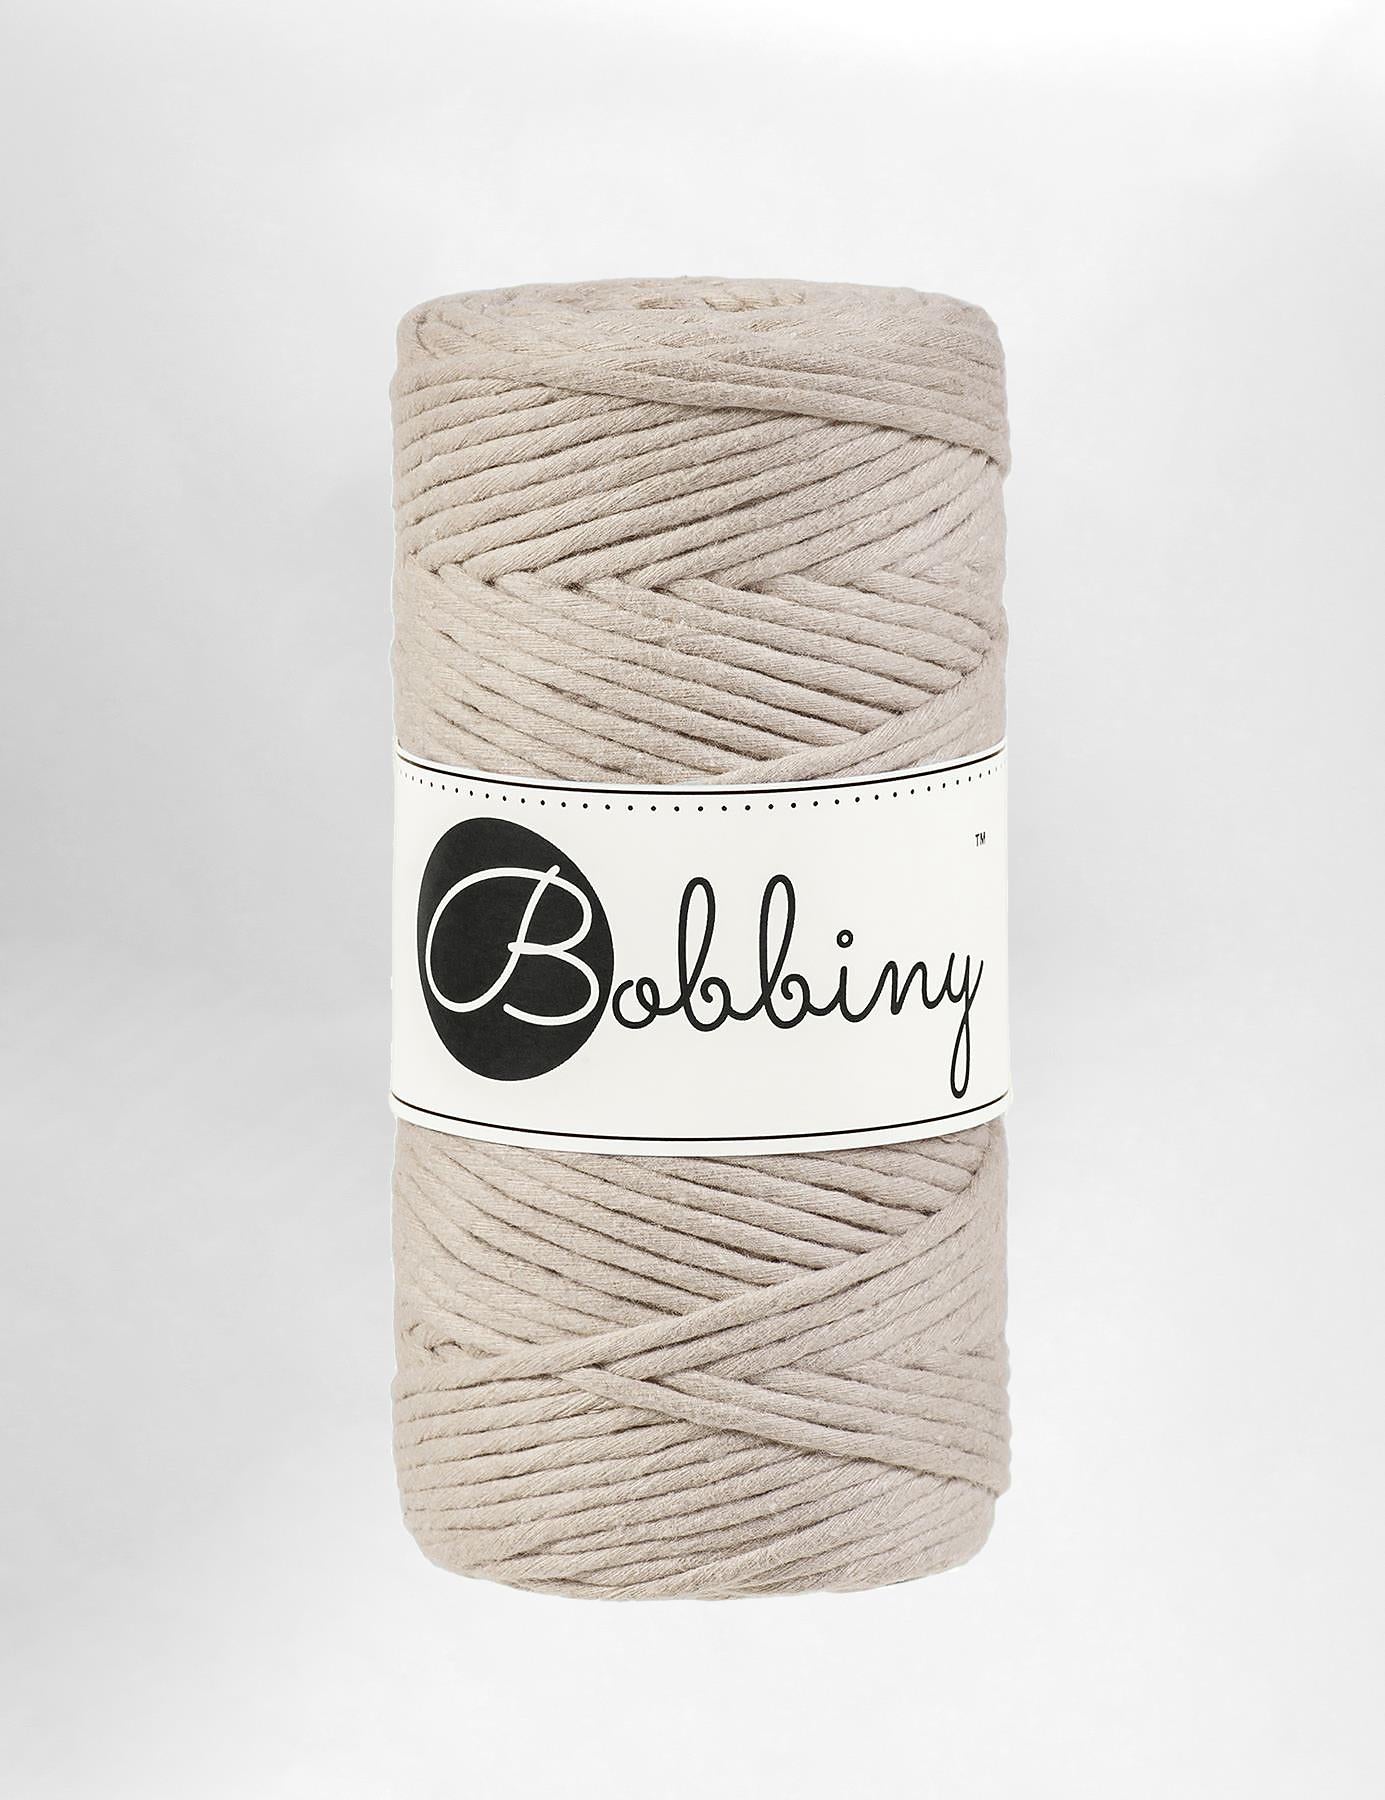 Bobbiny 3mm Beige single twist recycled cotton macrame cord (100m)